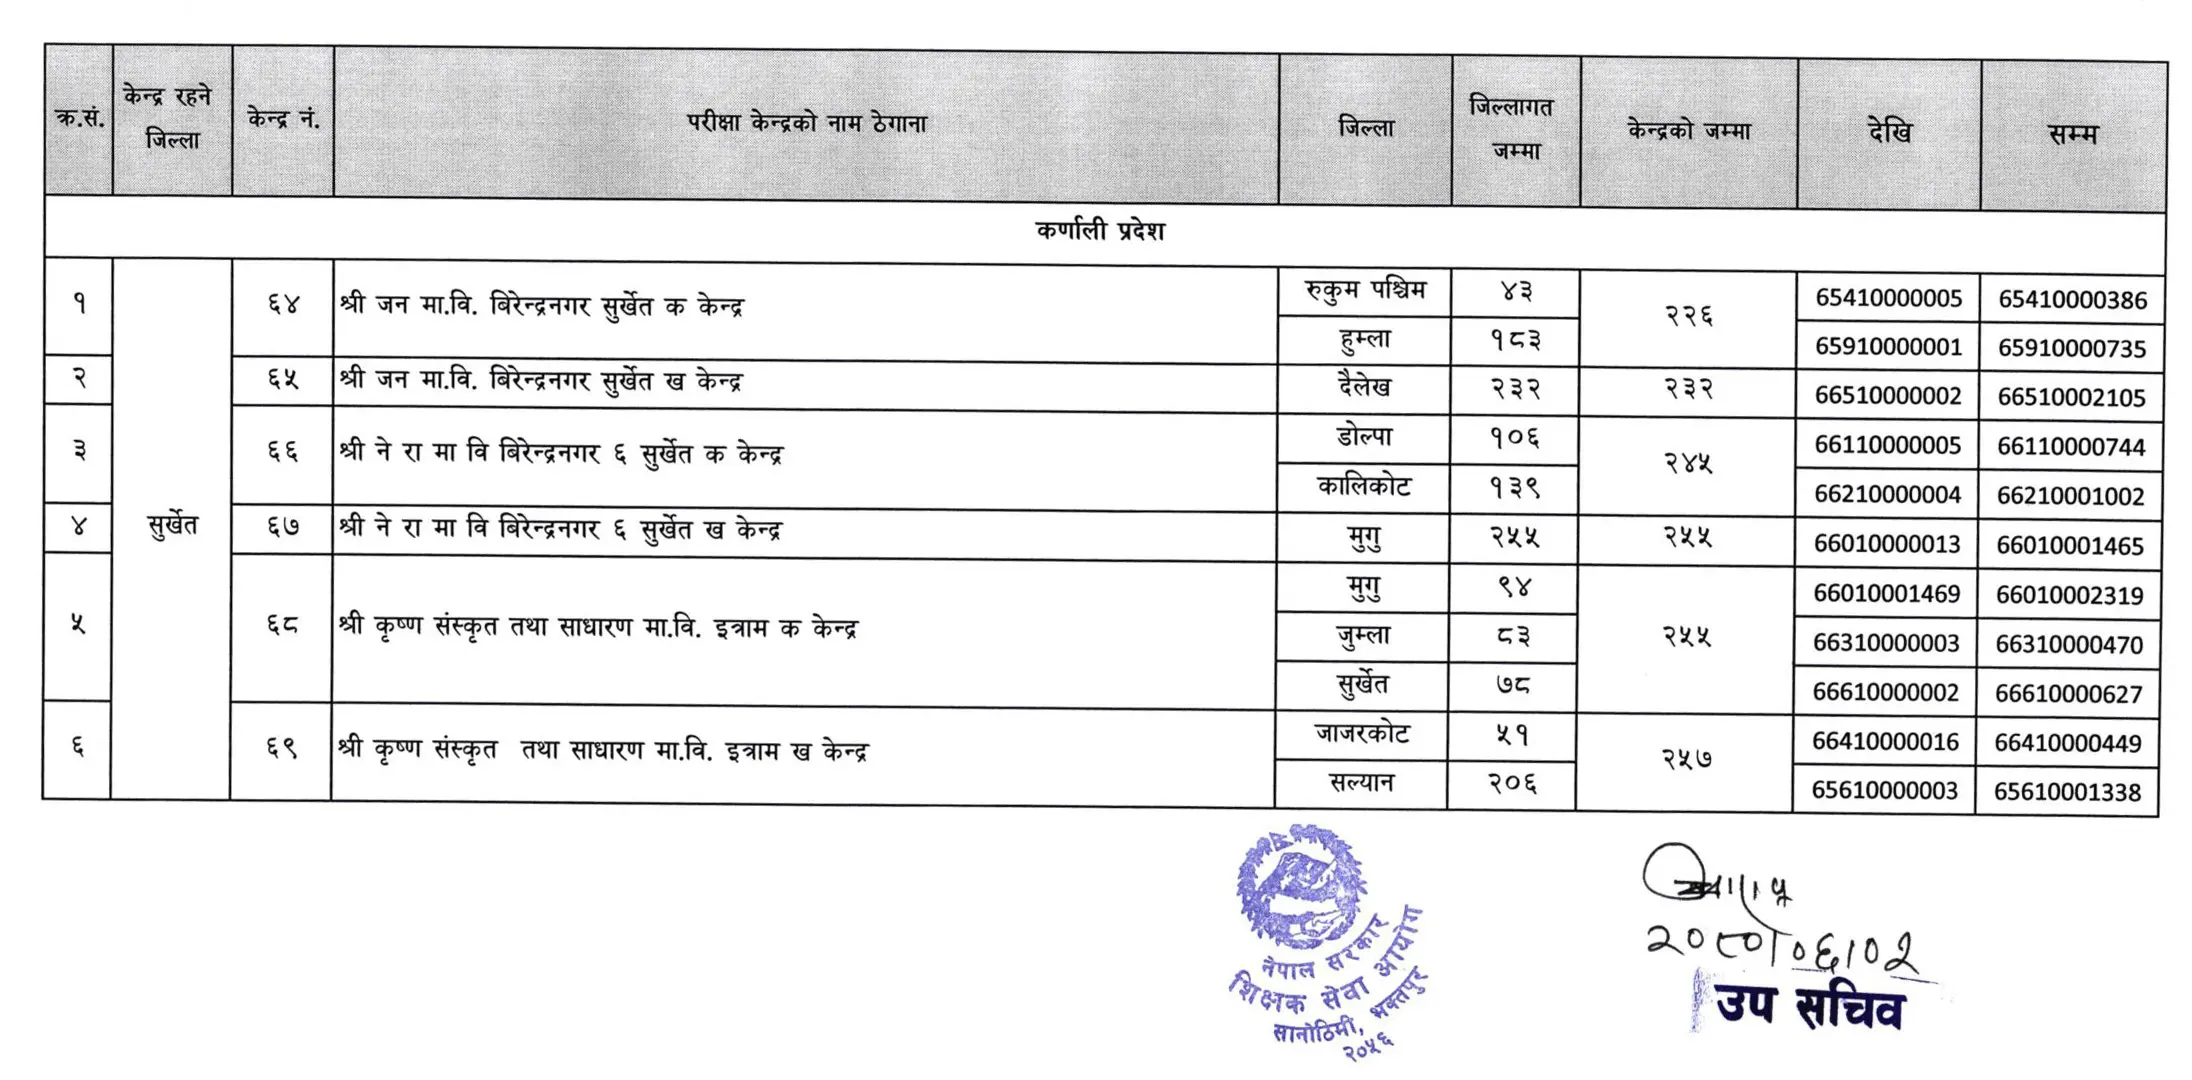 Karnali Pradesh Primary Level Written Examination Center 2080